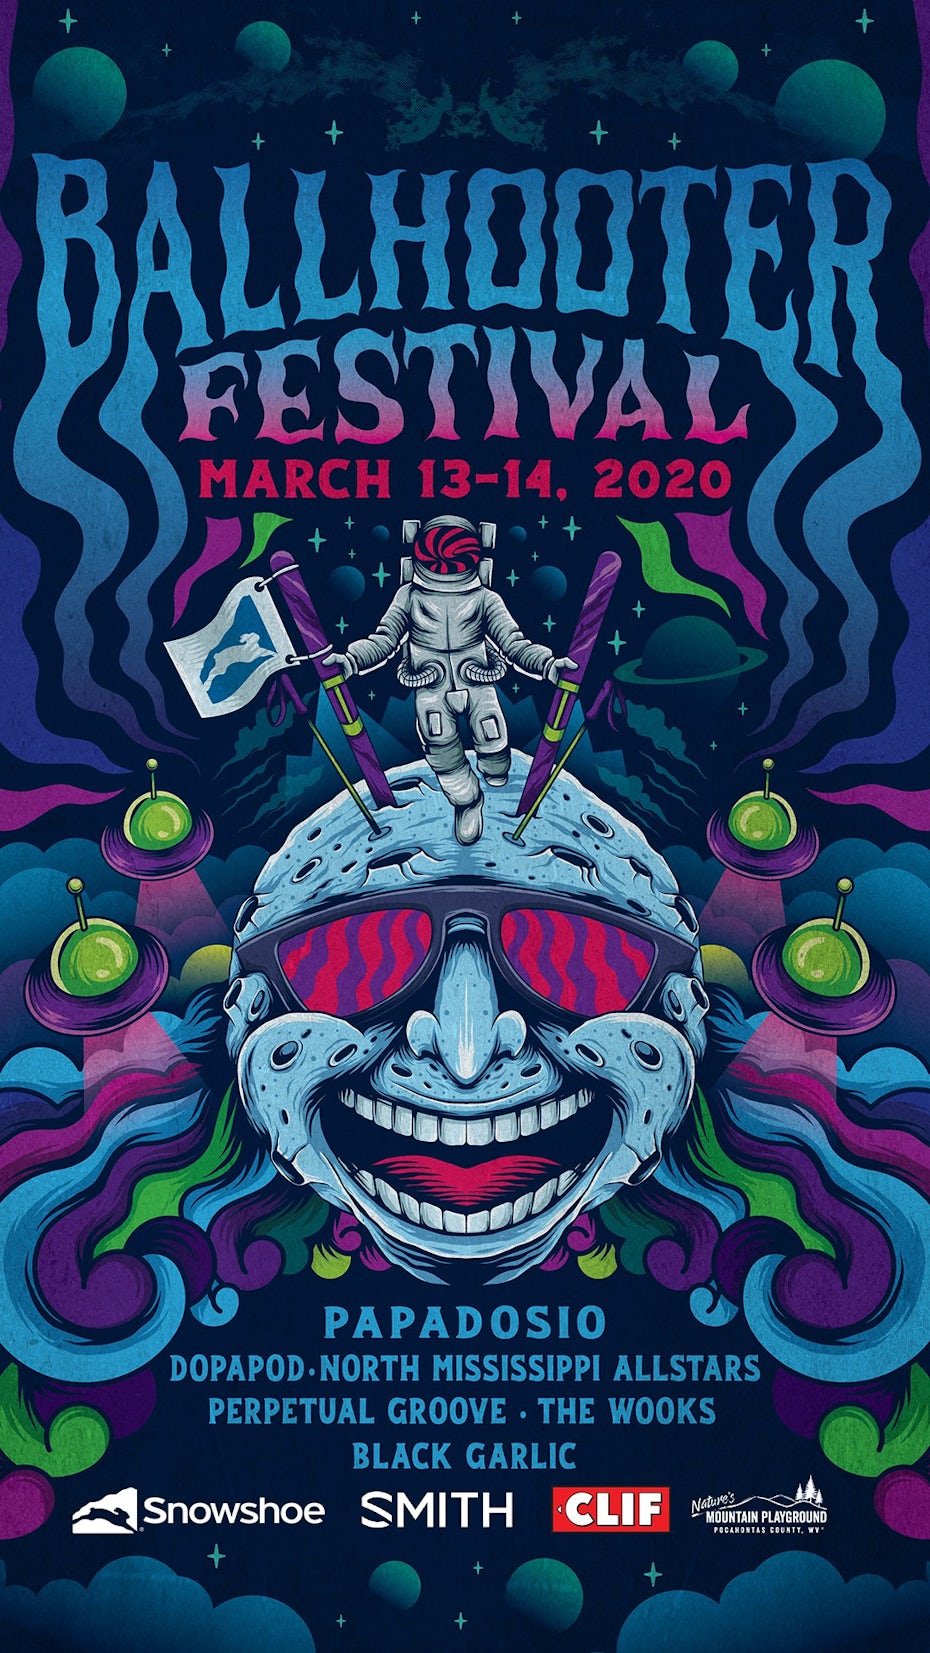 Tendencias de diseño gráfico inspiradoras:  Ilustración de cartel psicodélico para un festival de música.